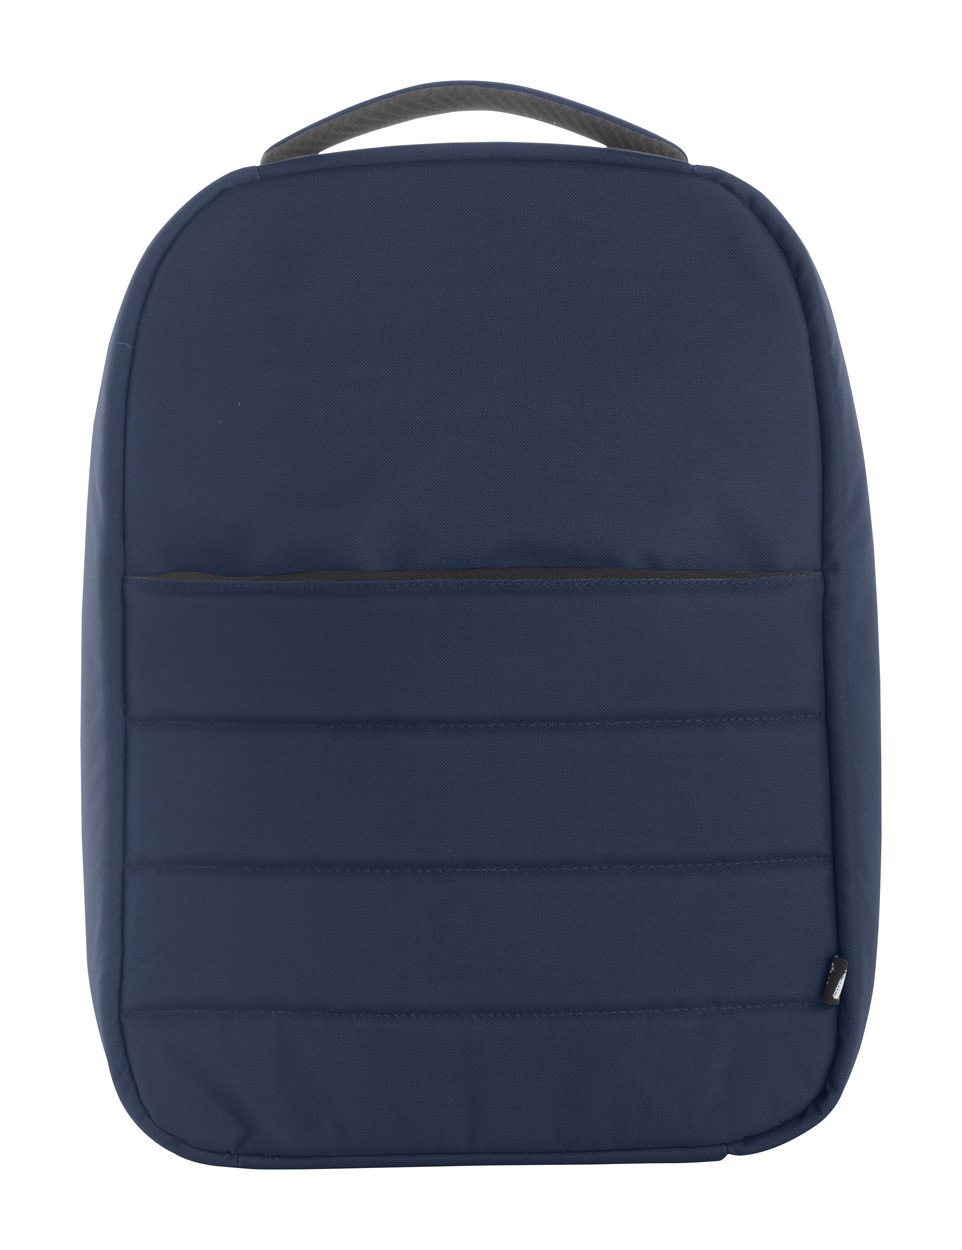 Danium RPET backpack - blue